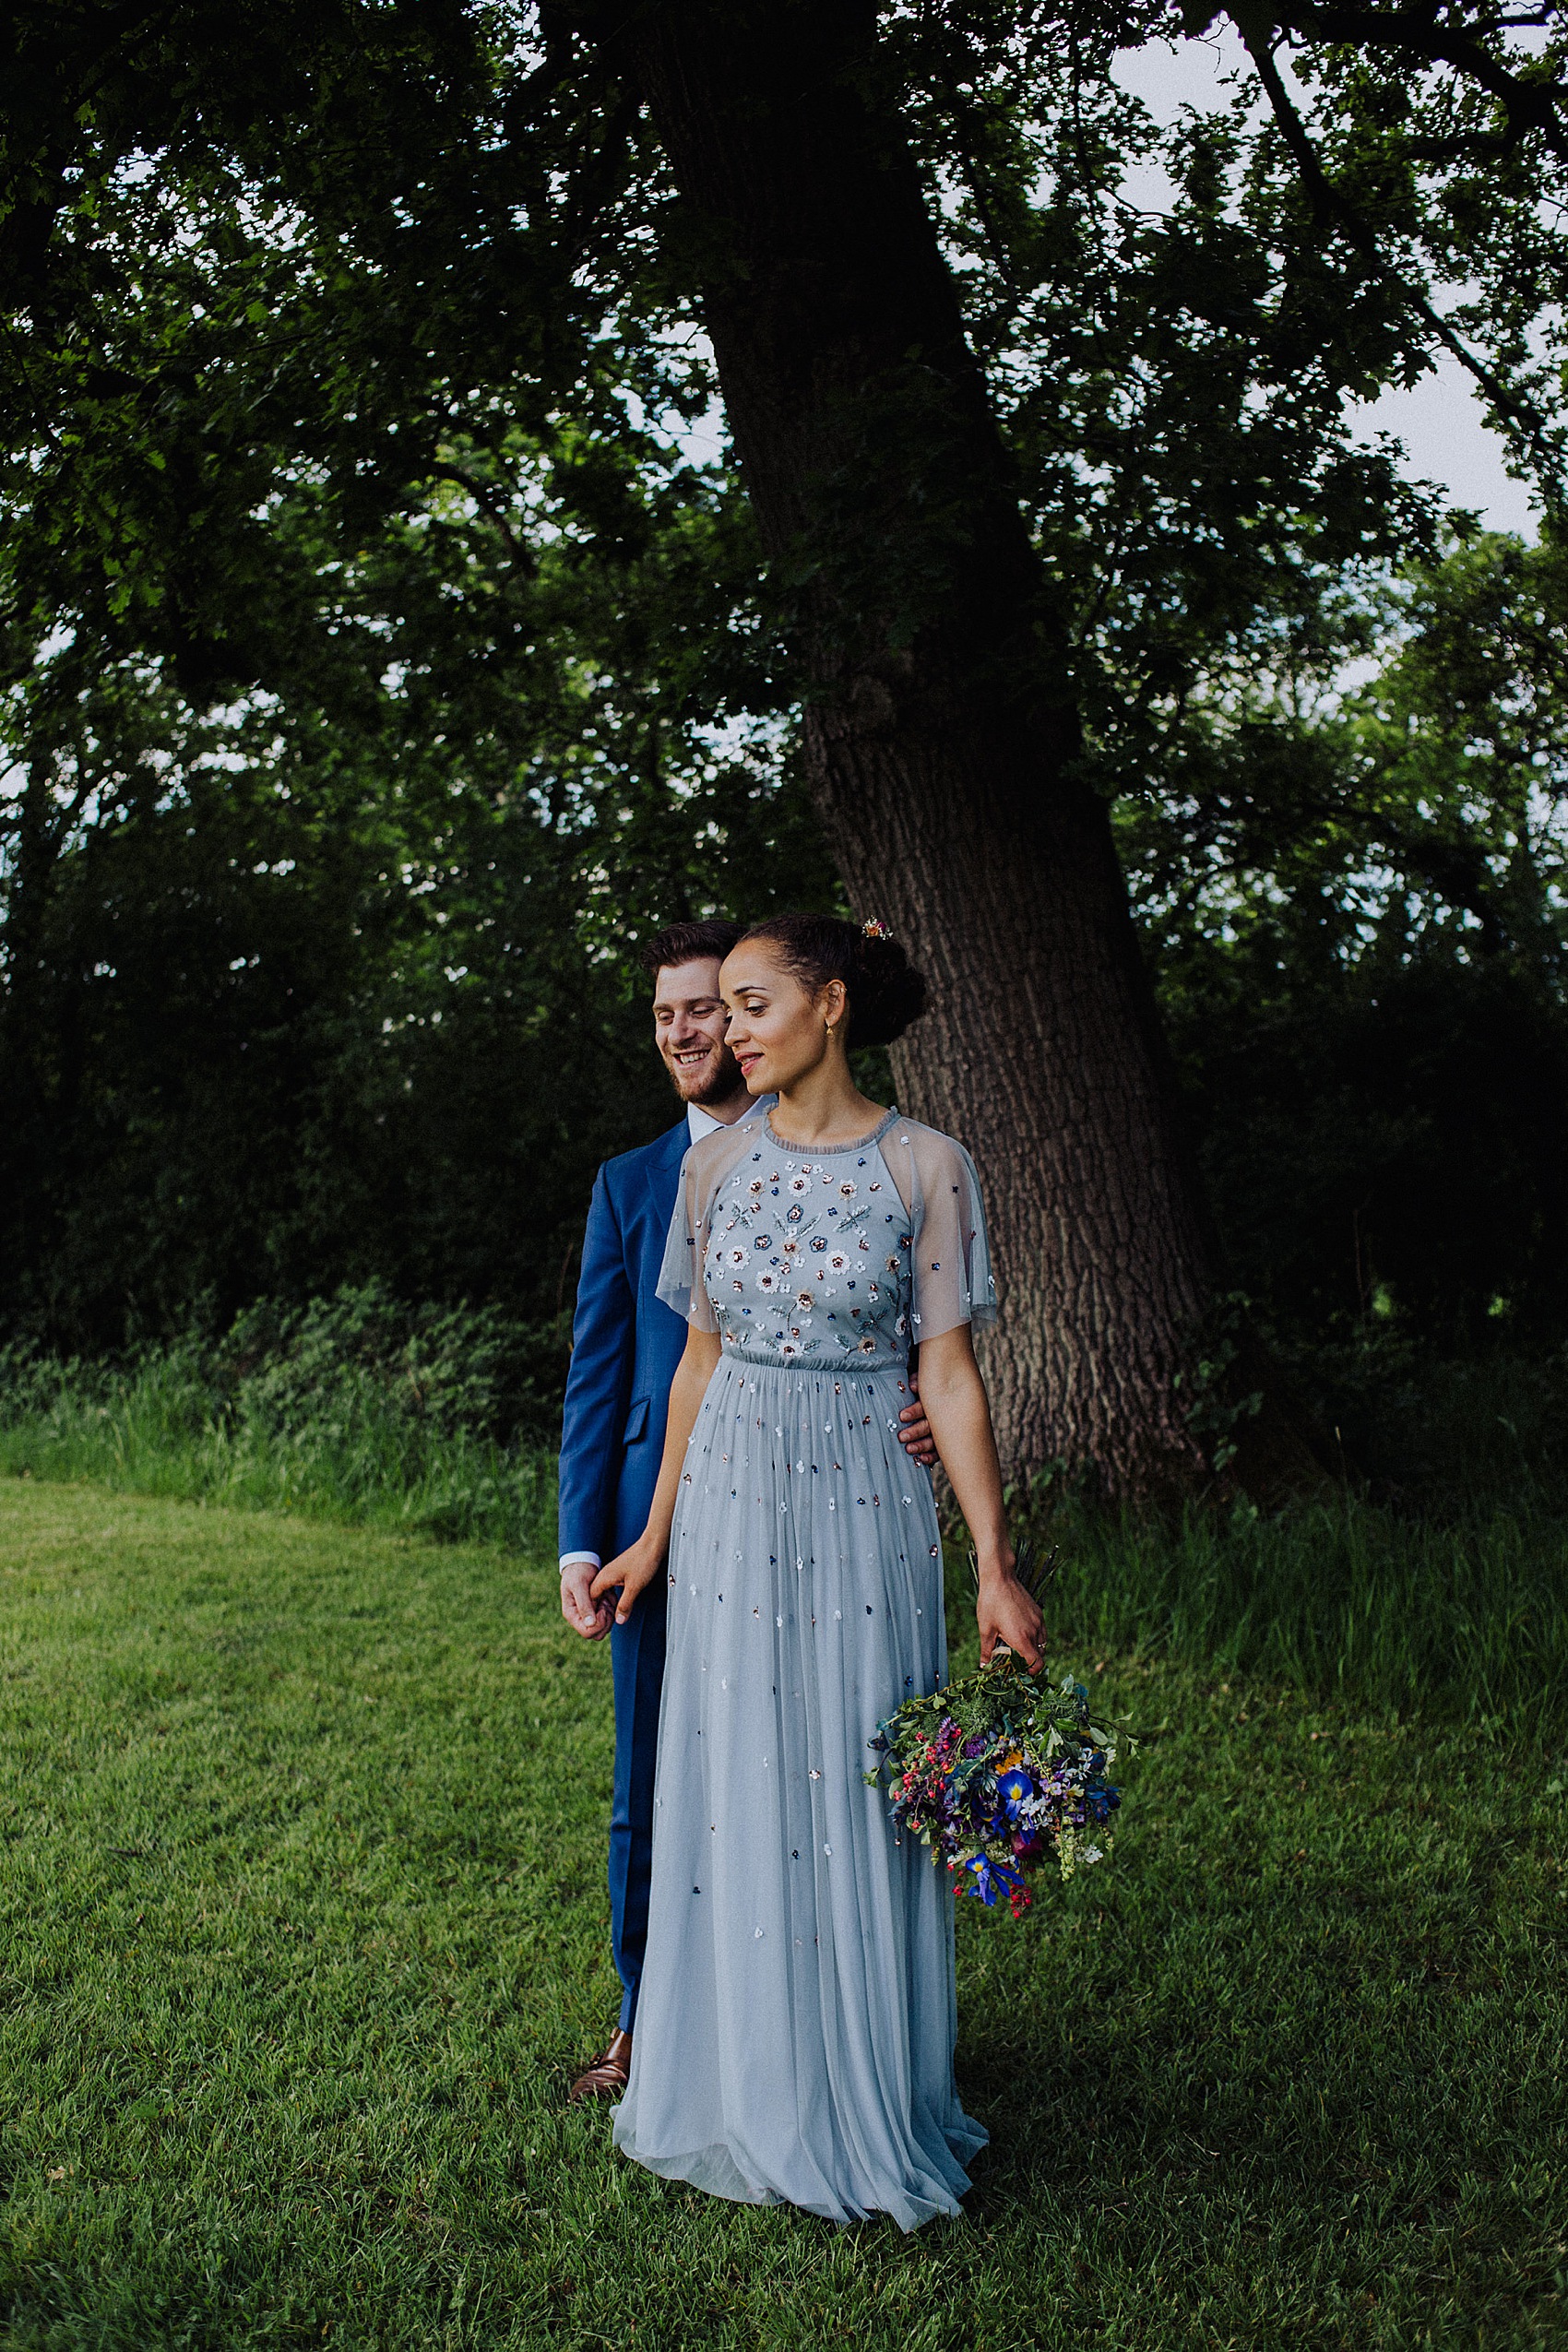 My Dream Wedding Dress Shopping Guide » Wolf & Stag | Enchanted wedding  dress, Embellished wedding dress, Needle and thread wedding dresses